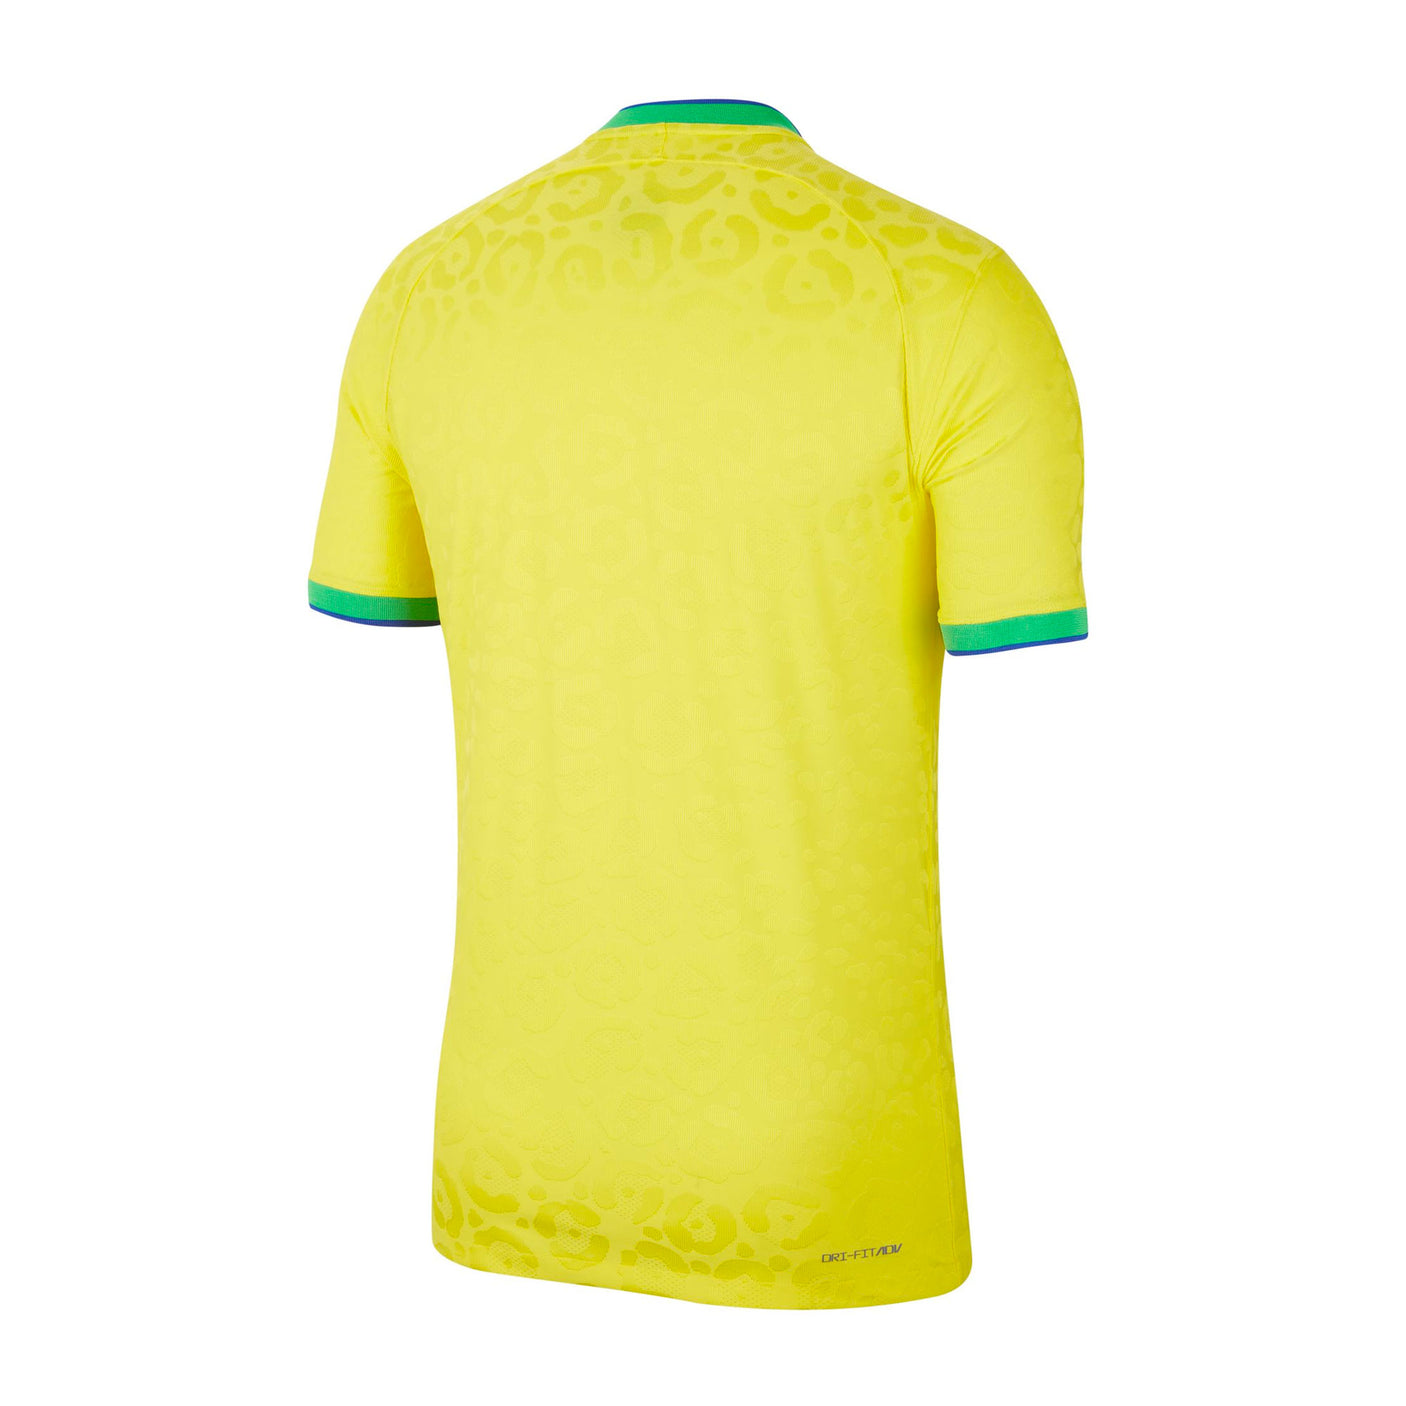 Brazil 2022/23 Match Home Men's Nike Dri-FIT ADV Football Shirt